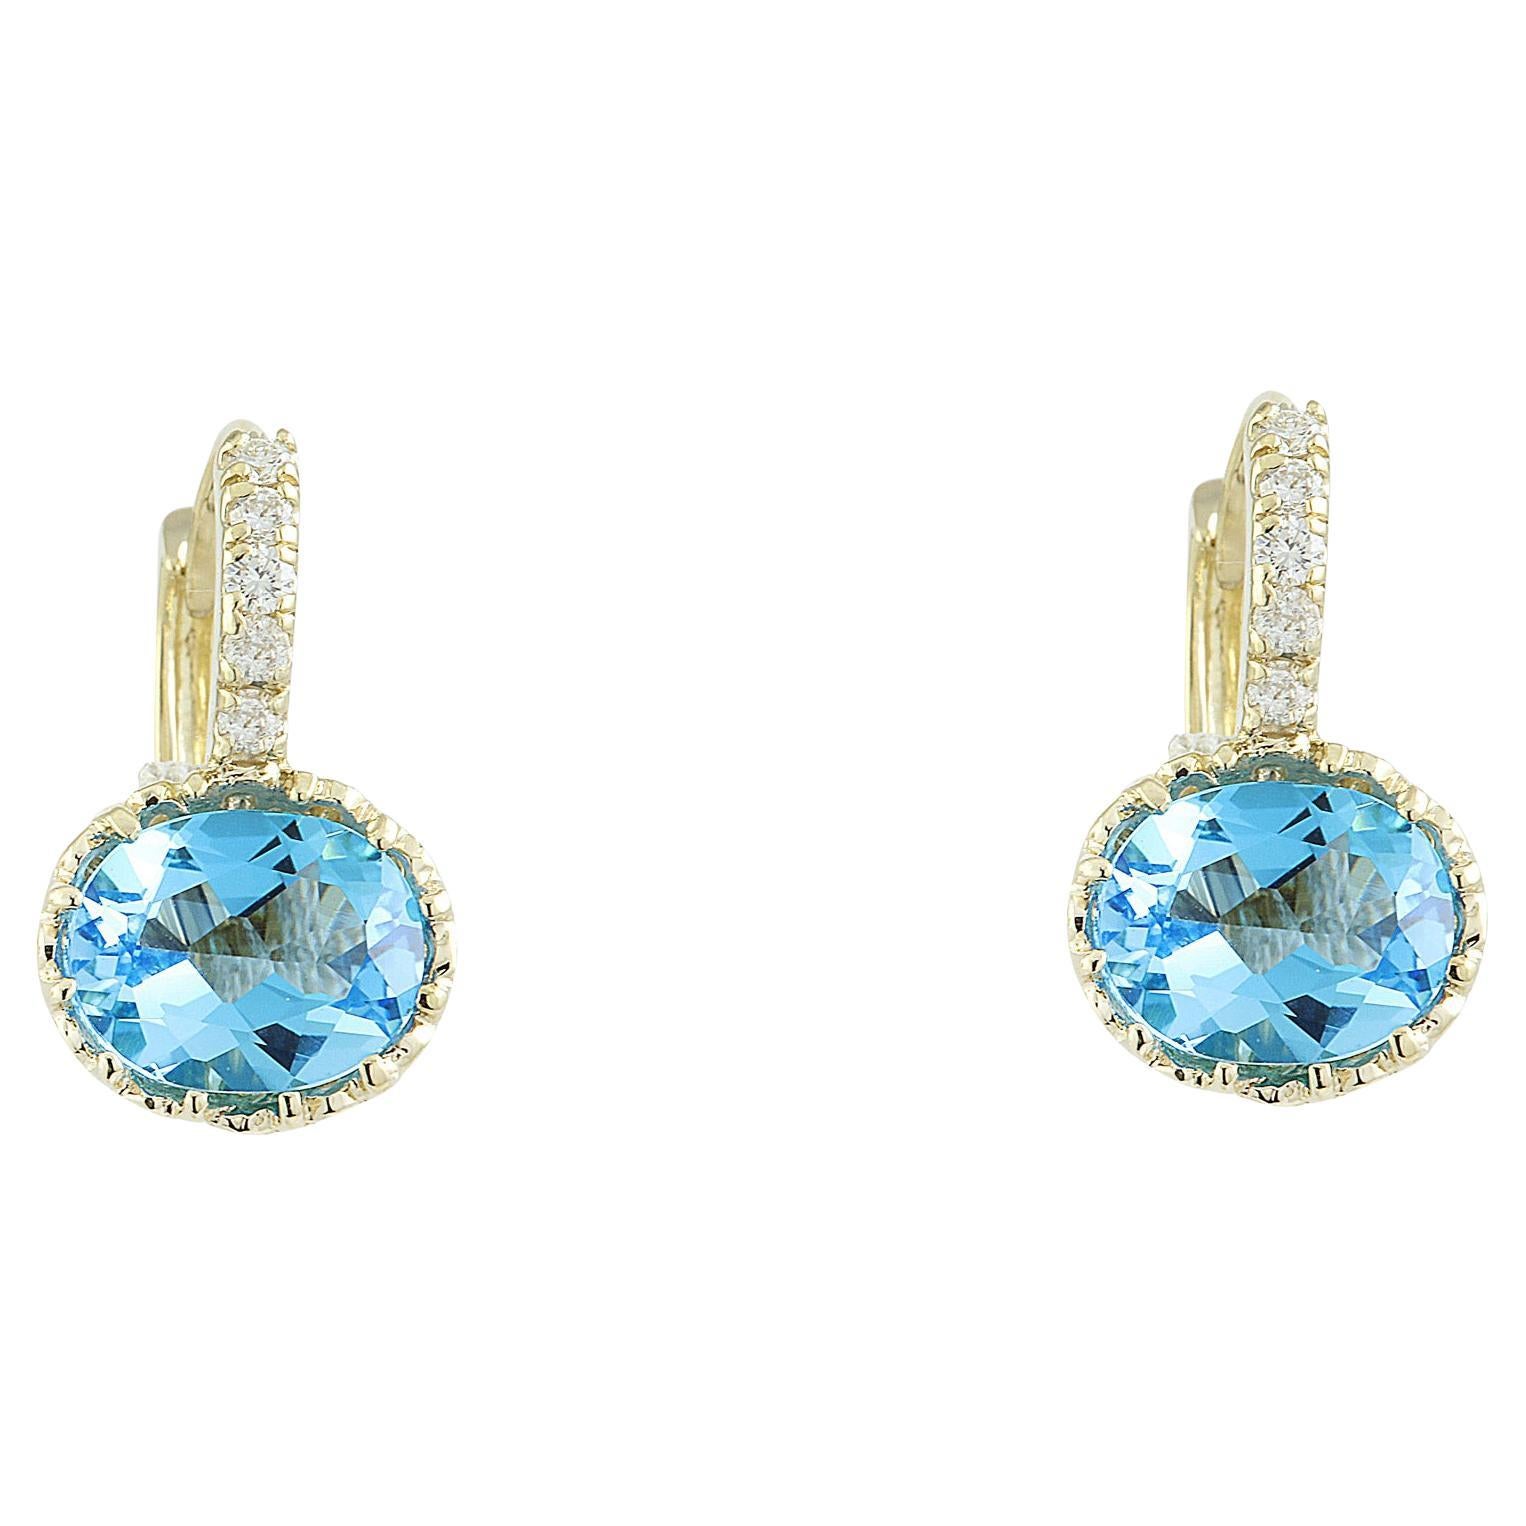 Dazzling Topaz Diamond Earrings: Luxurious Elegance in 14K Solid Yellow Gold